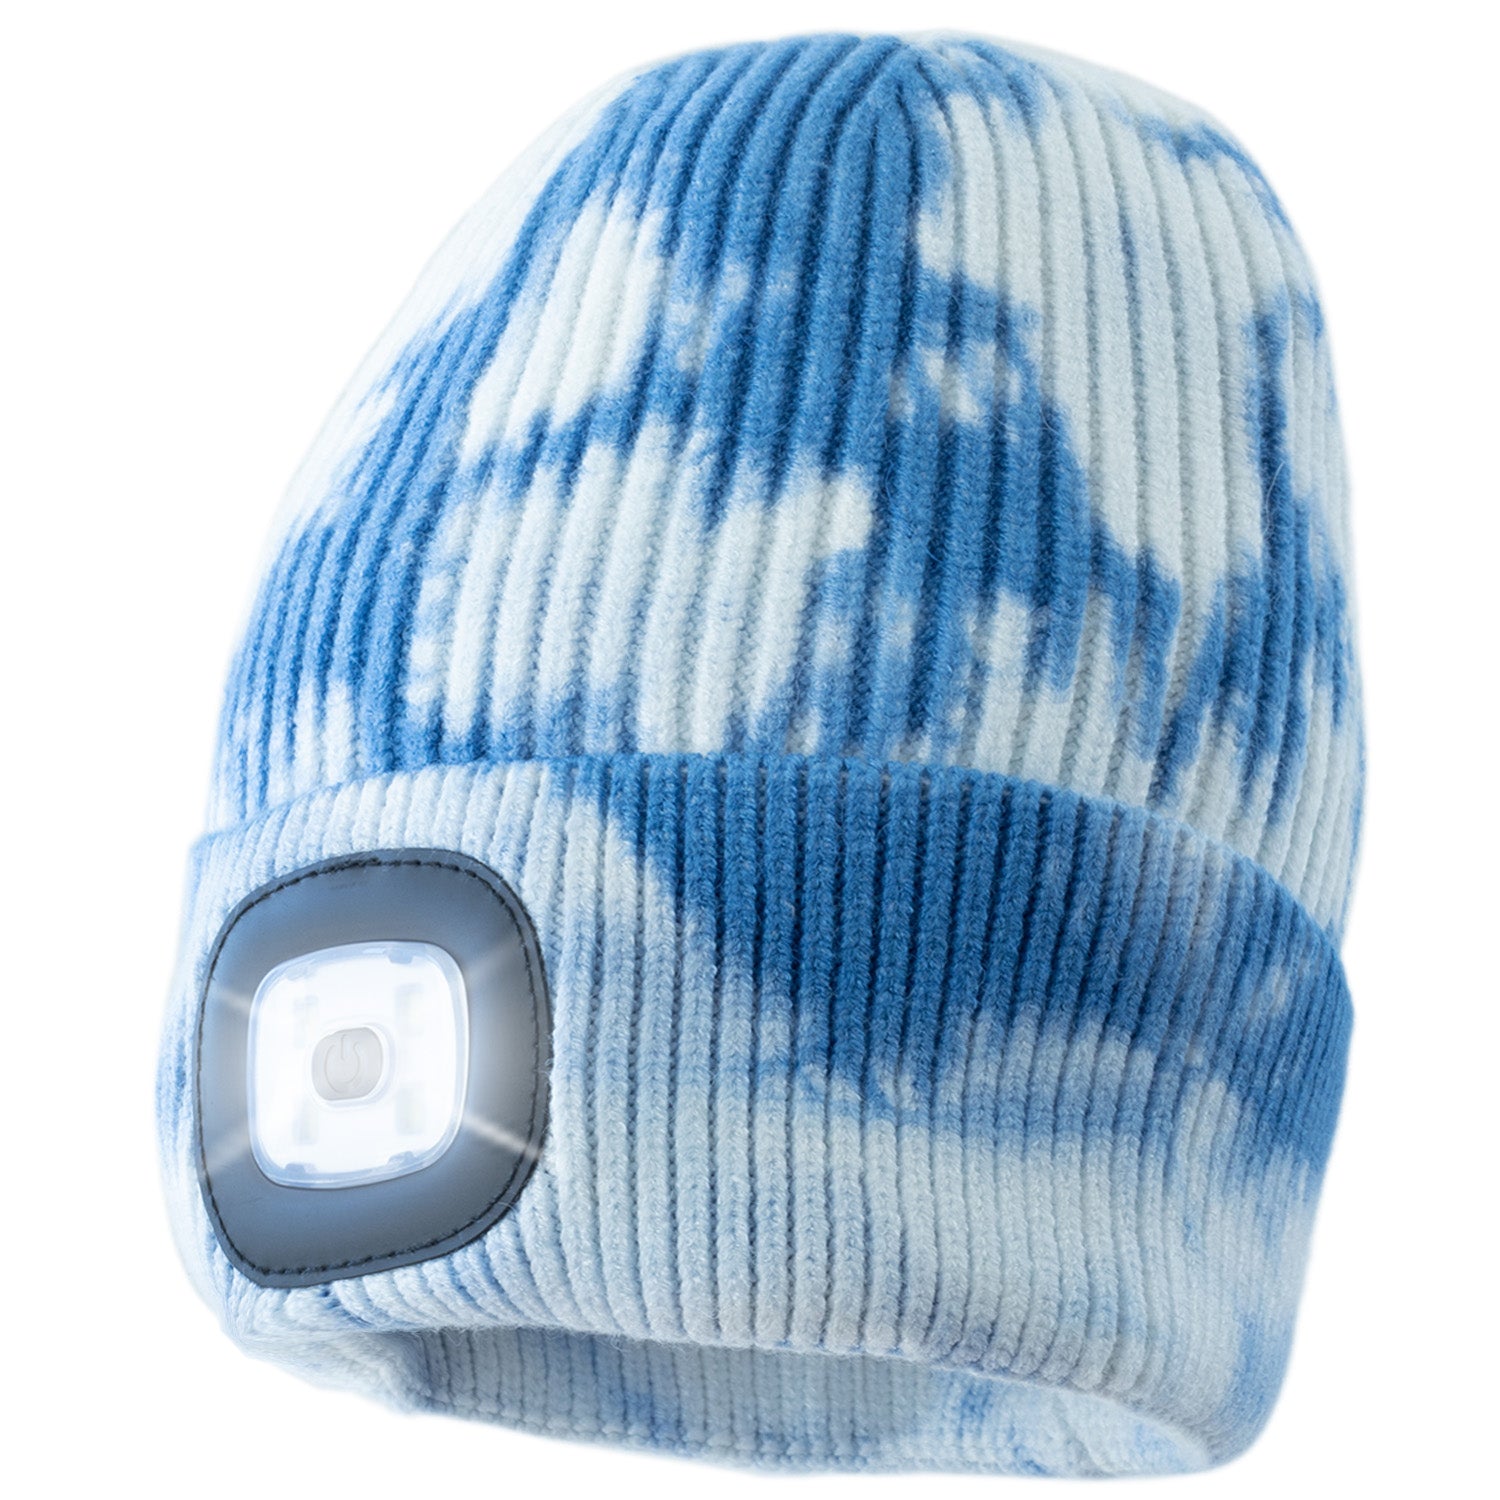 Blue Knit Dye Innovation Headlightz® Tie - Roq – Beanie -